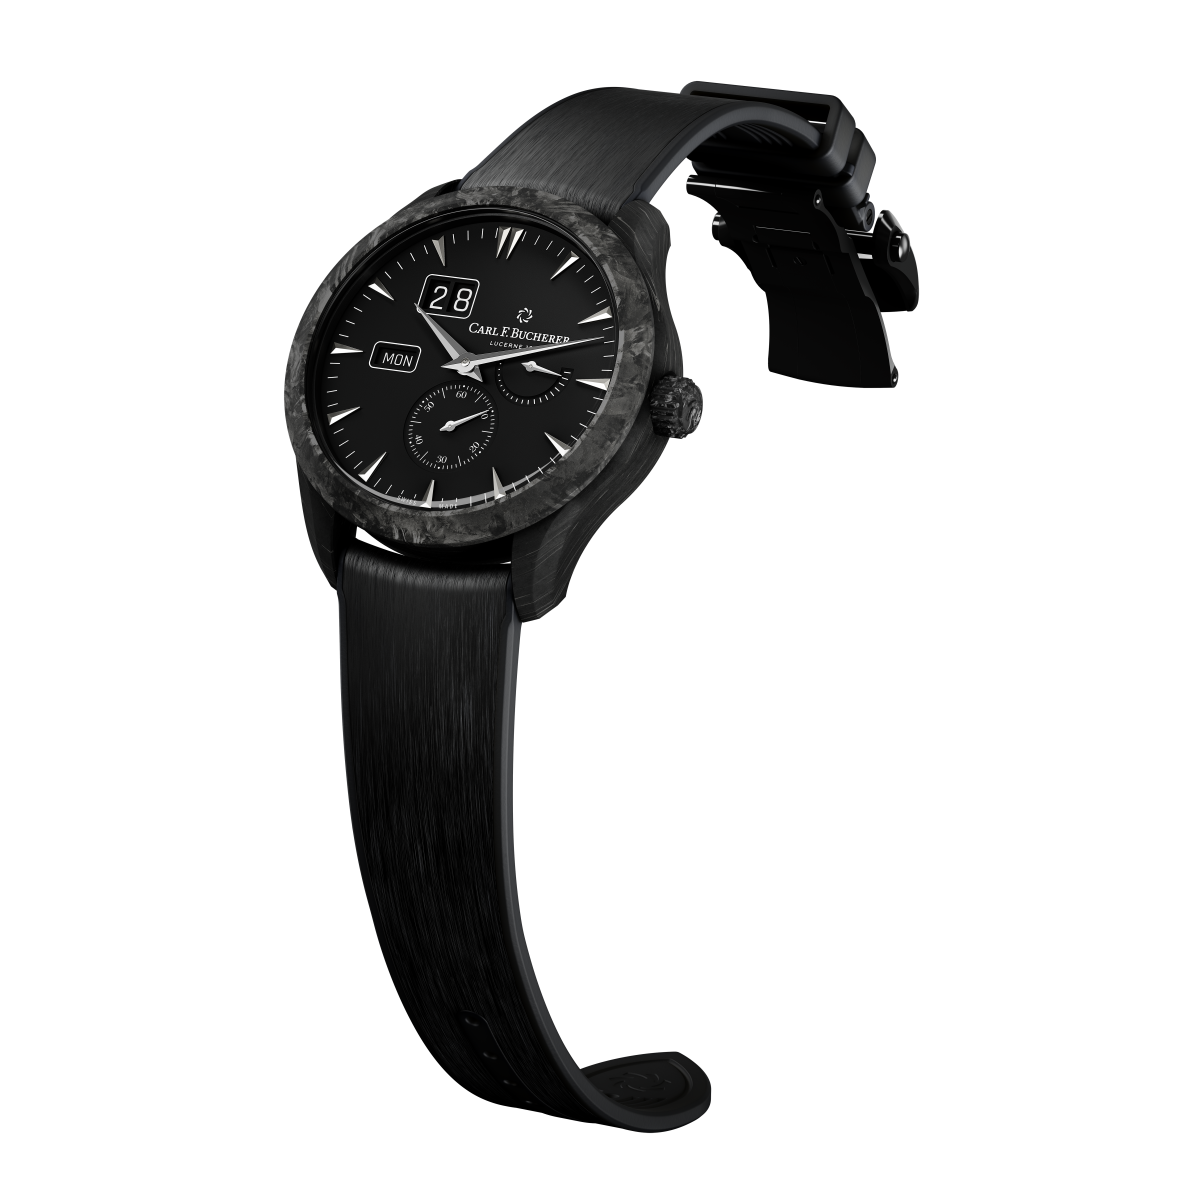 Carl F. Bucherer Manero Chronometer Carbon Limited Edition Men's Watch